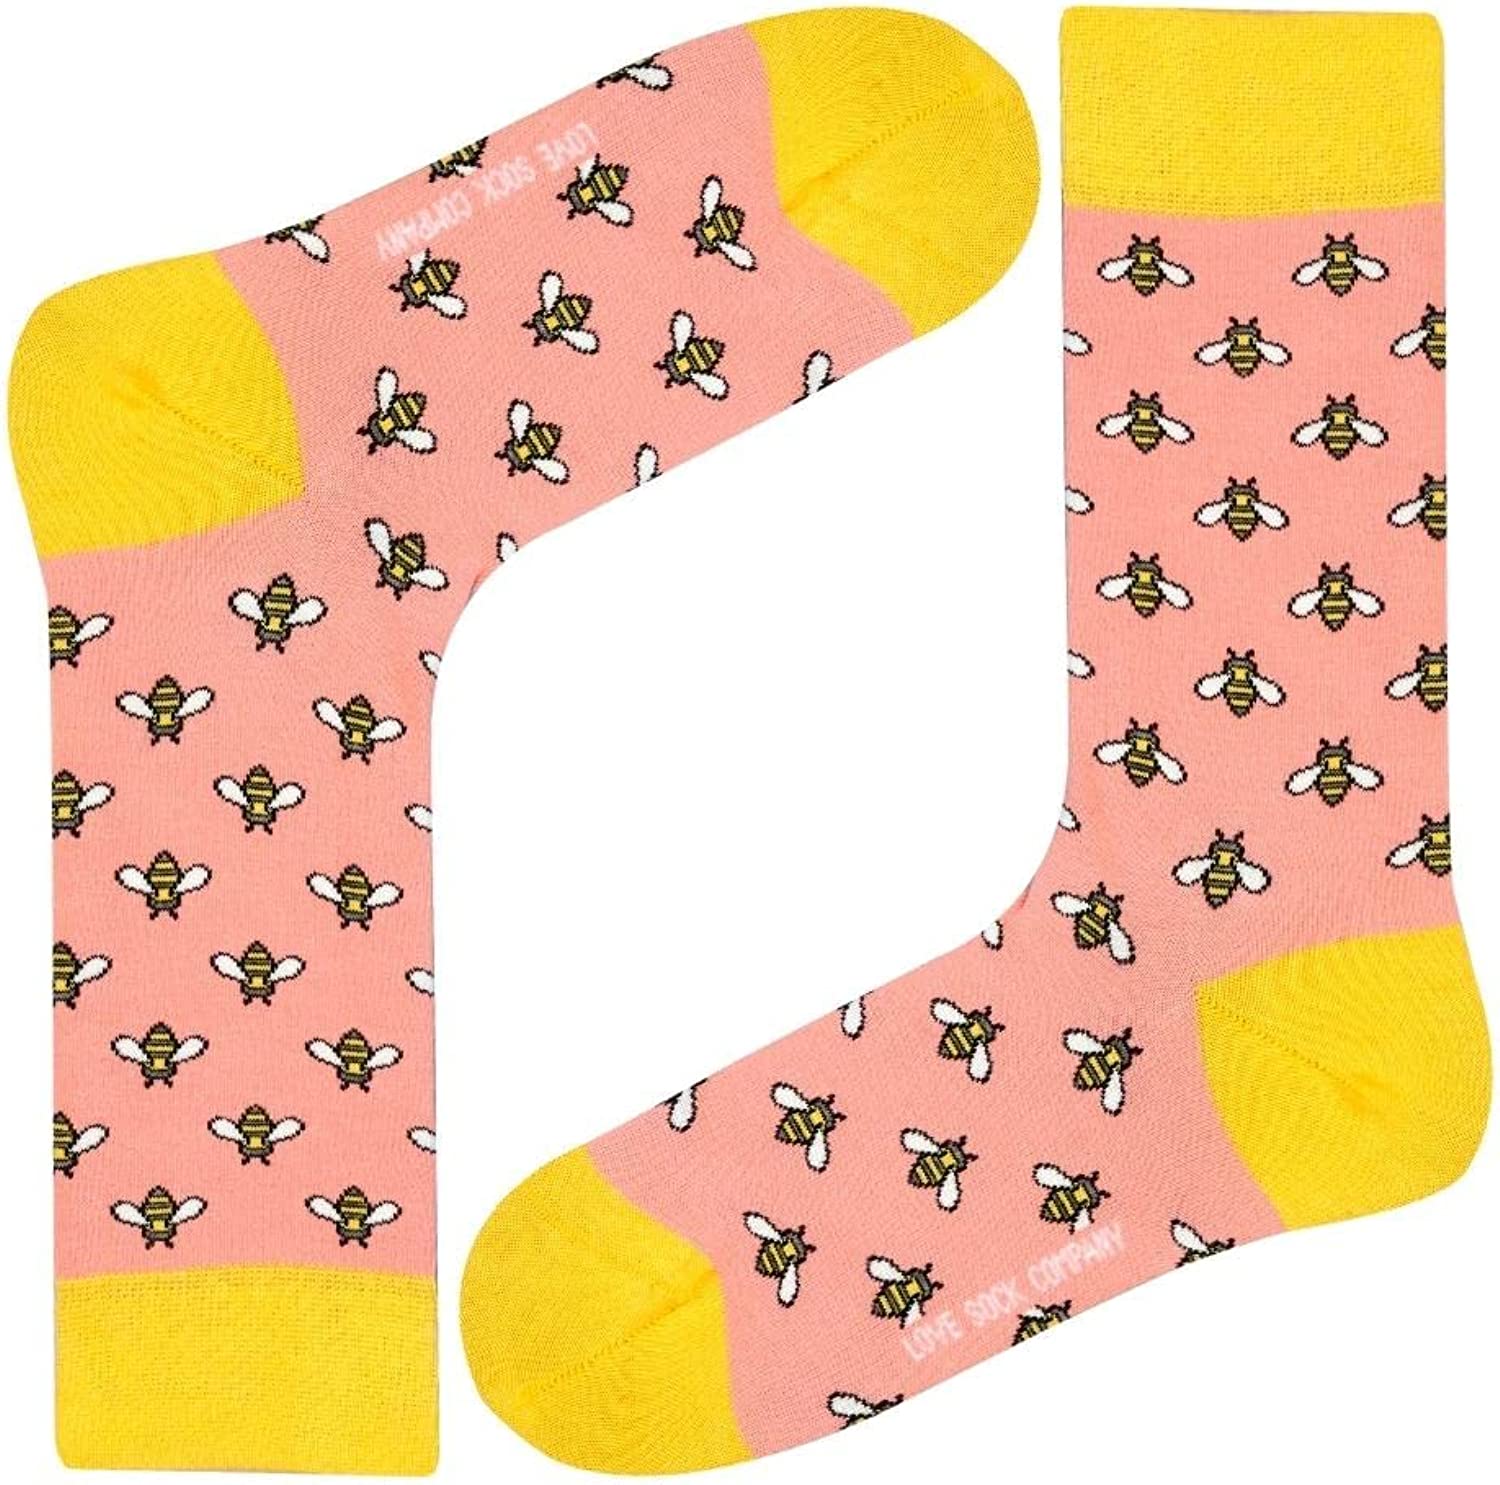 Love Sock Company organic cotton colorful fun novelty crew socks (Bee, 6-9, Pink)